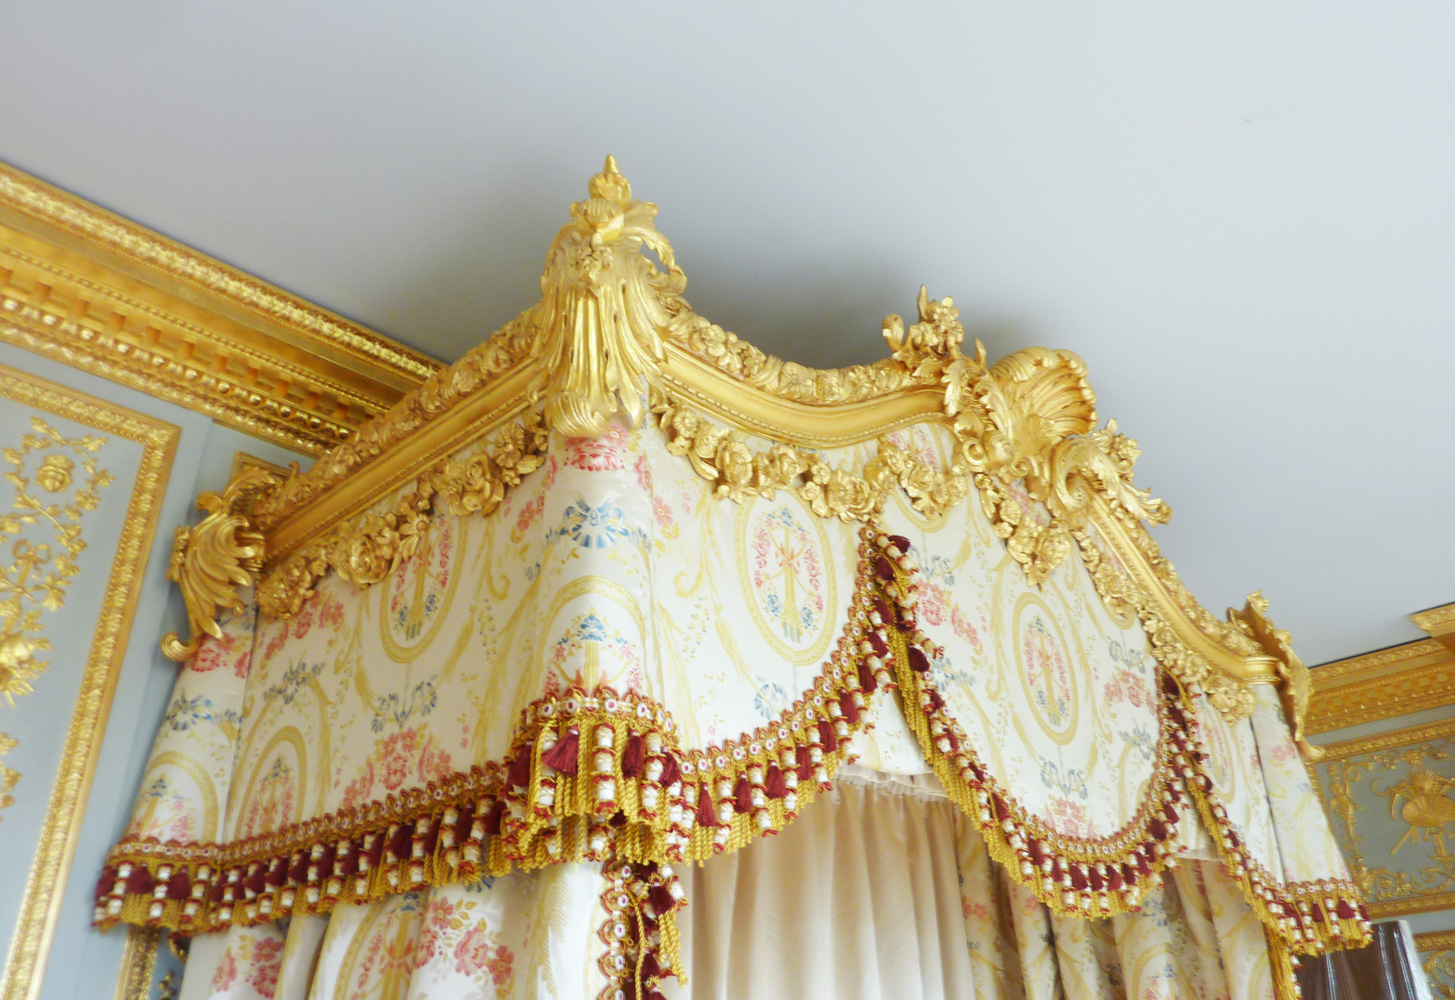 Louis XVI bed